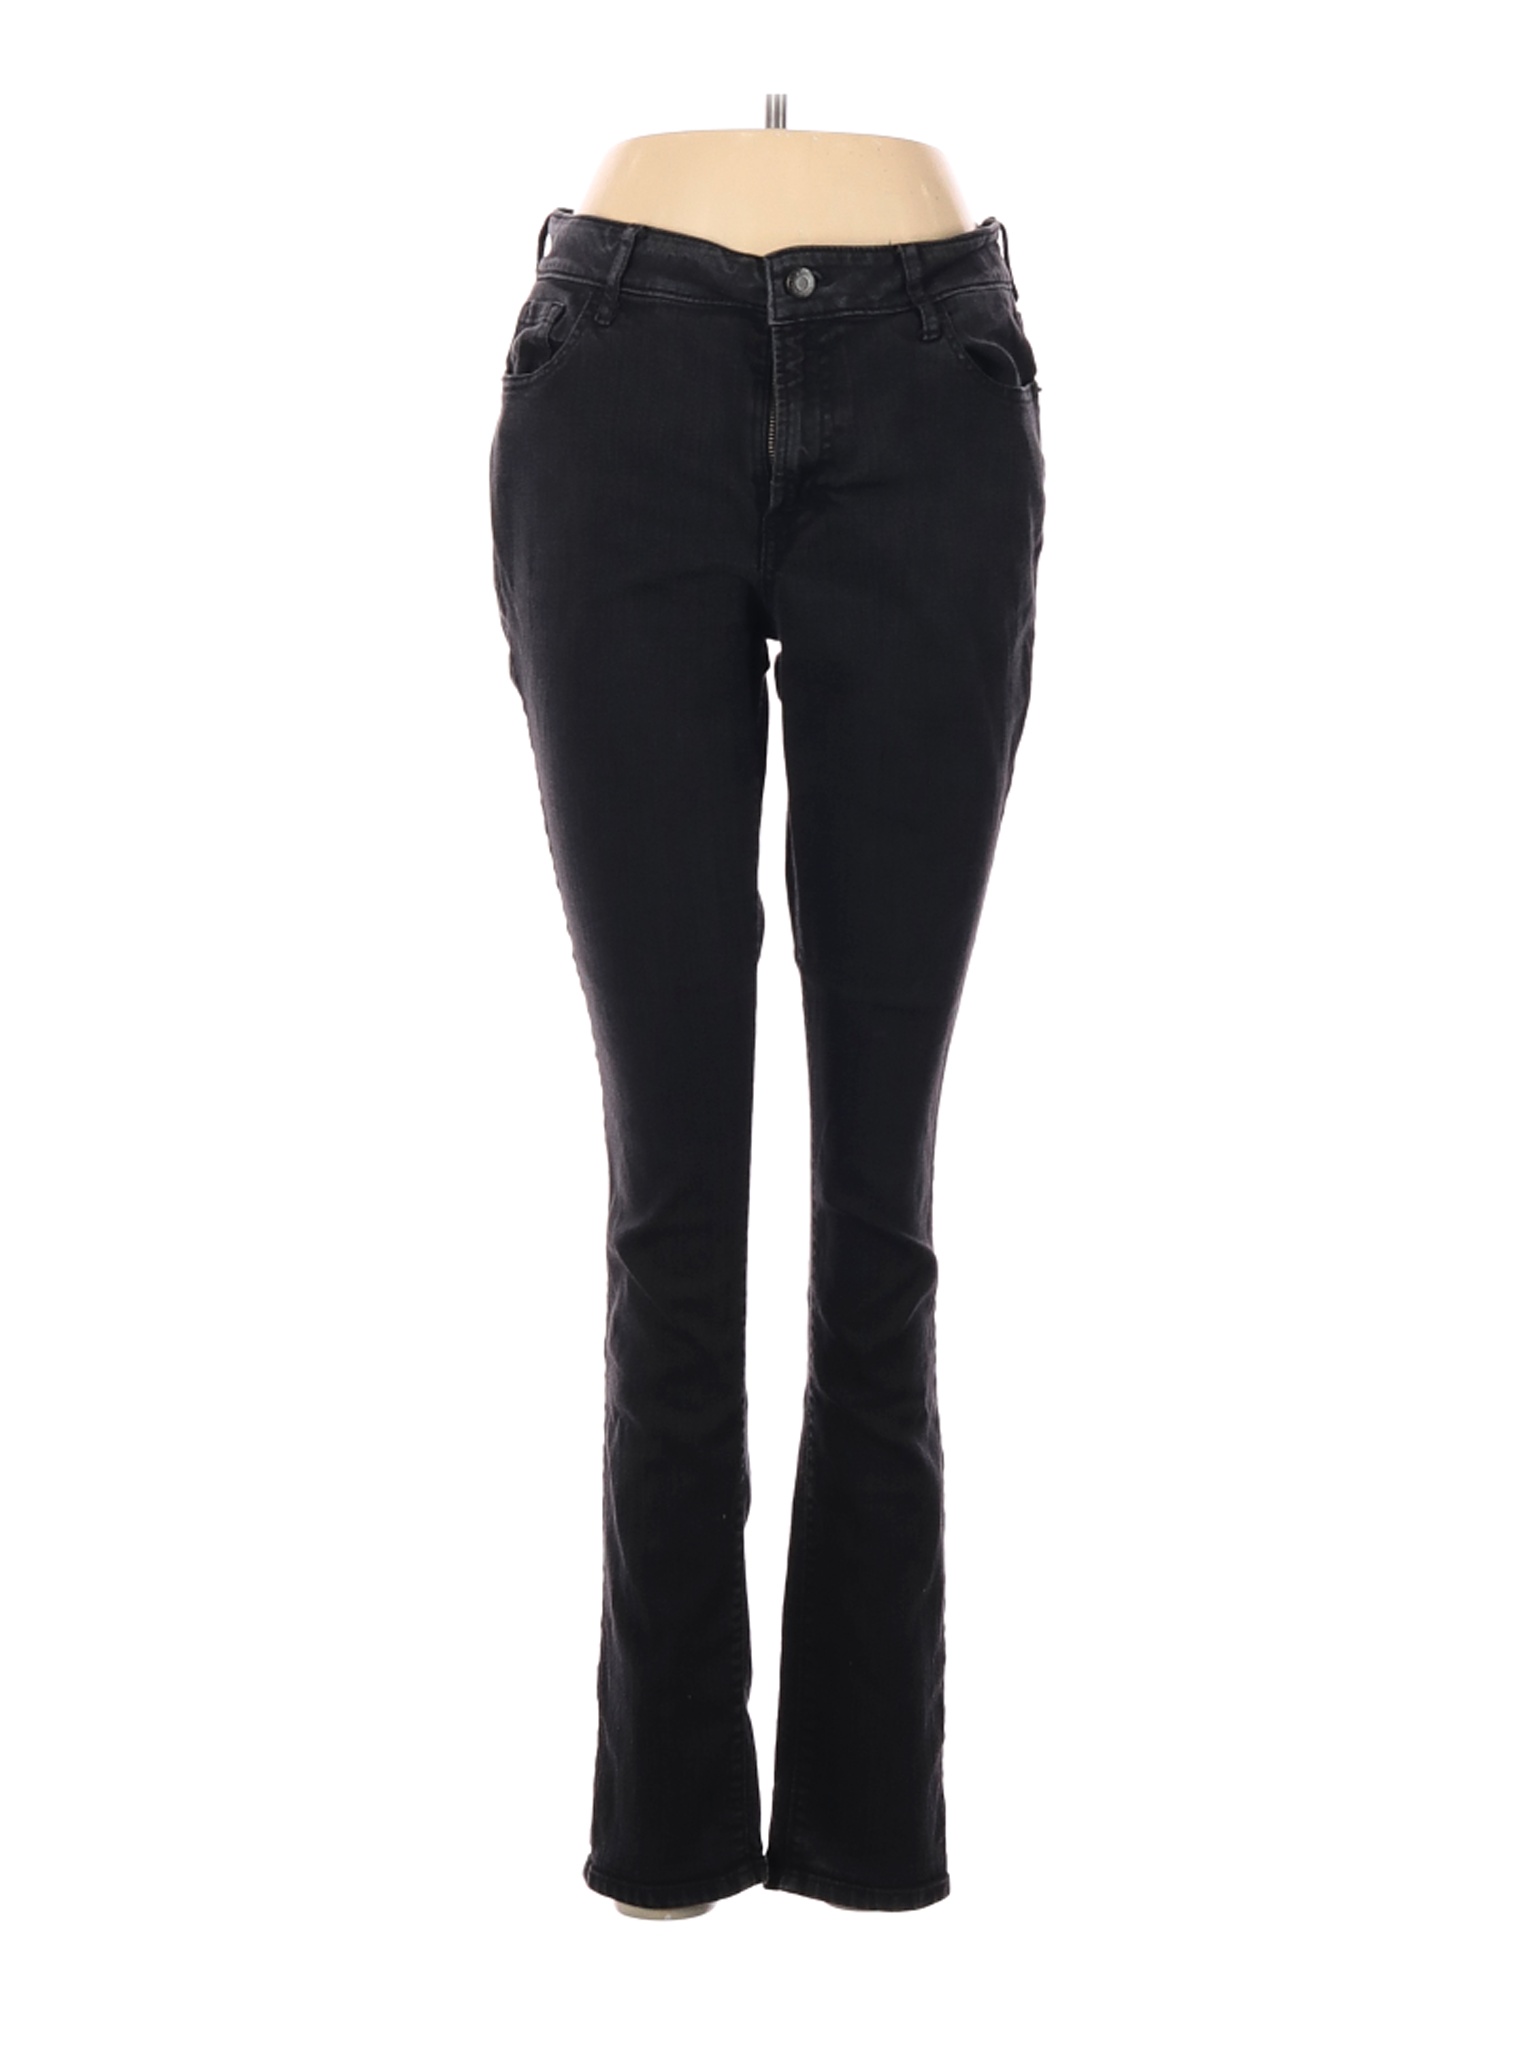 Old Navy Women Black Jeans 8 | eBay